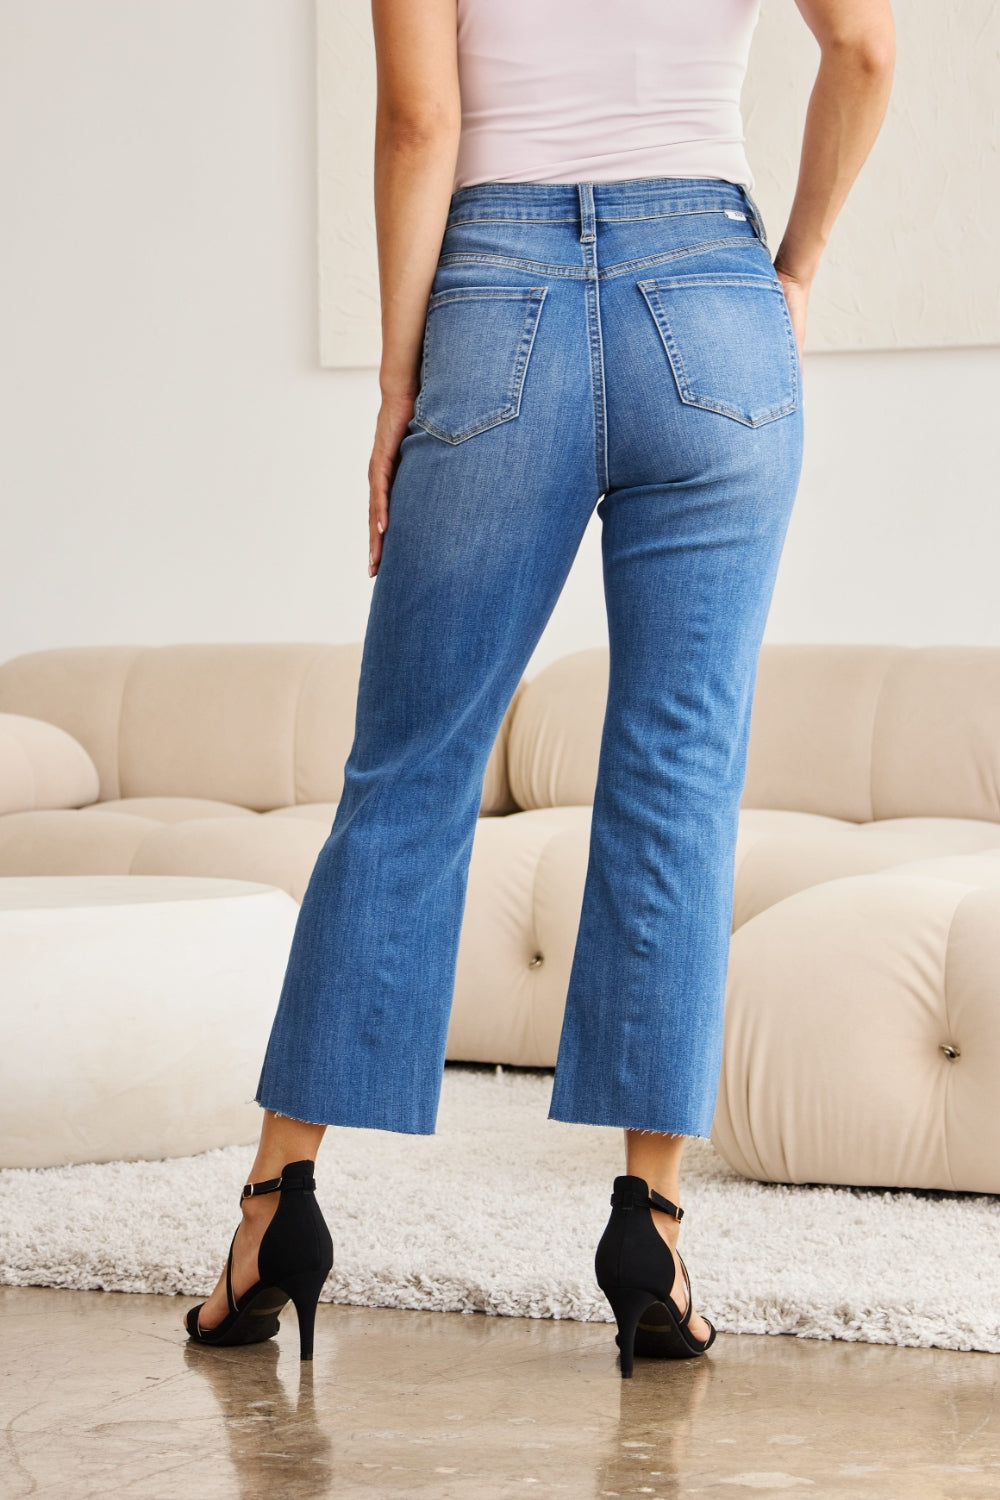 RFM Mini Mia Full Size Tummy Control High Waist Jeans-Jeans-Krush Kandy, Women's Online Fashion Boutique Located in Phoenix, Arizona (Scottsdale Area)